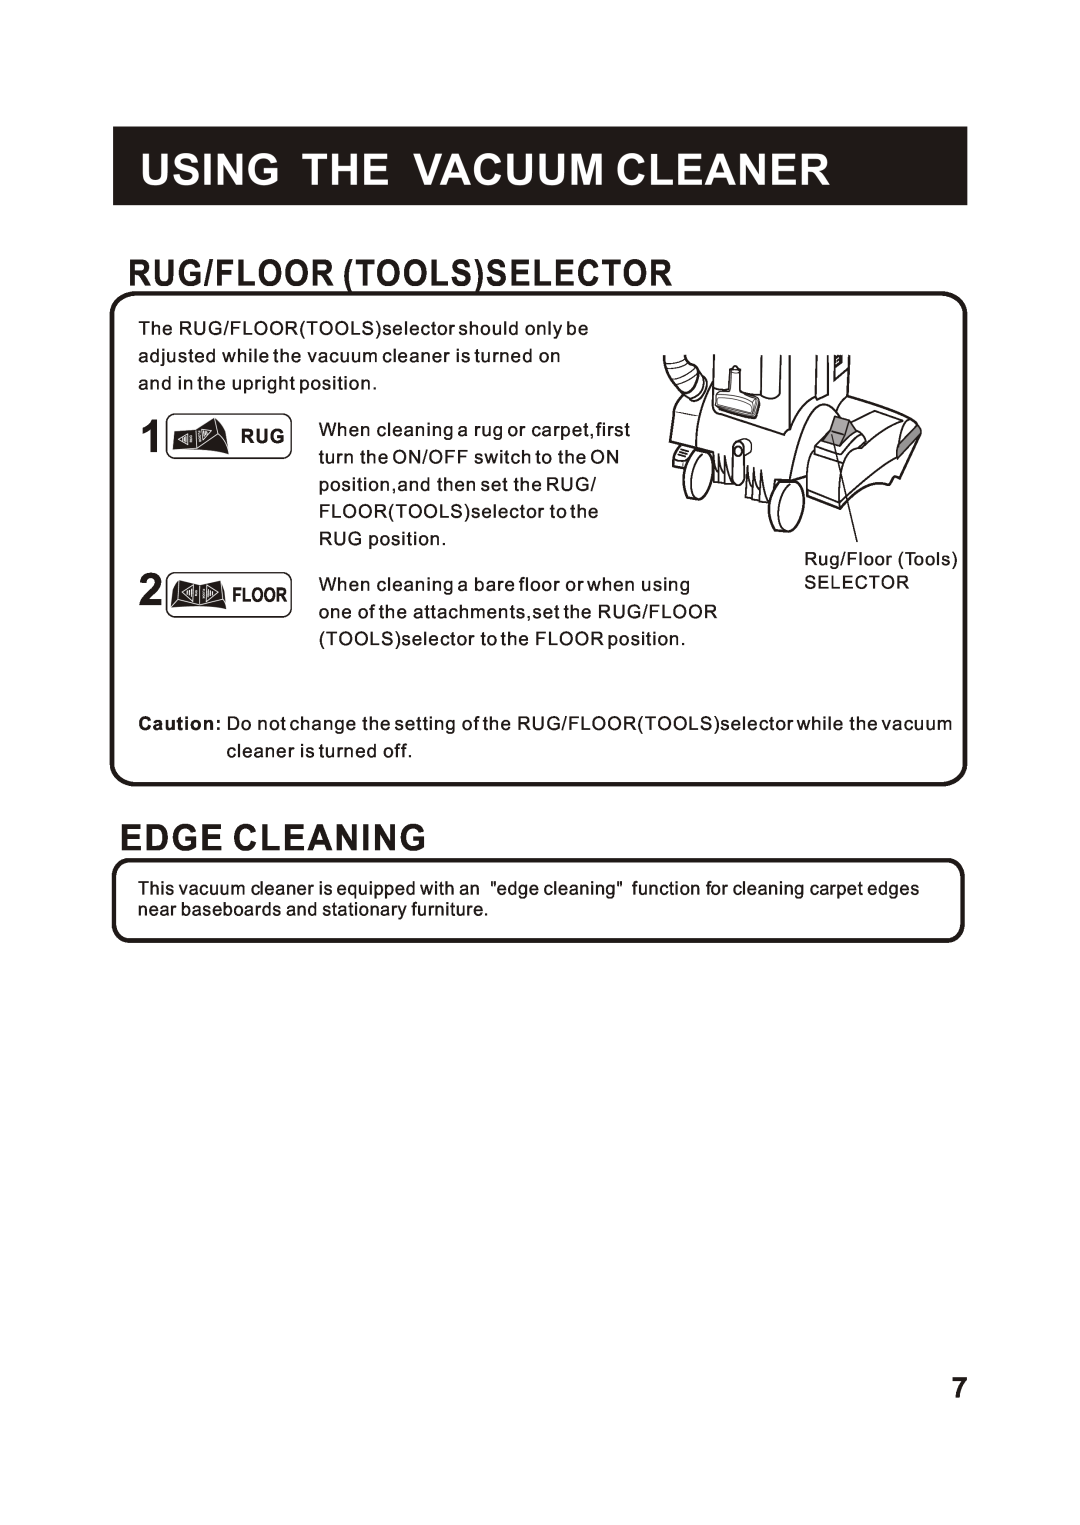 Fantom Vacuum FM655CS instruction manual Rug/Floor Toolsselector, Edge Cleaning, Using The Vacuum Cleaner 